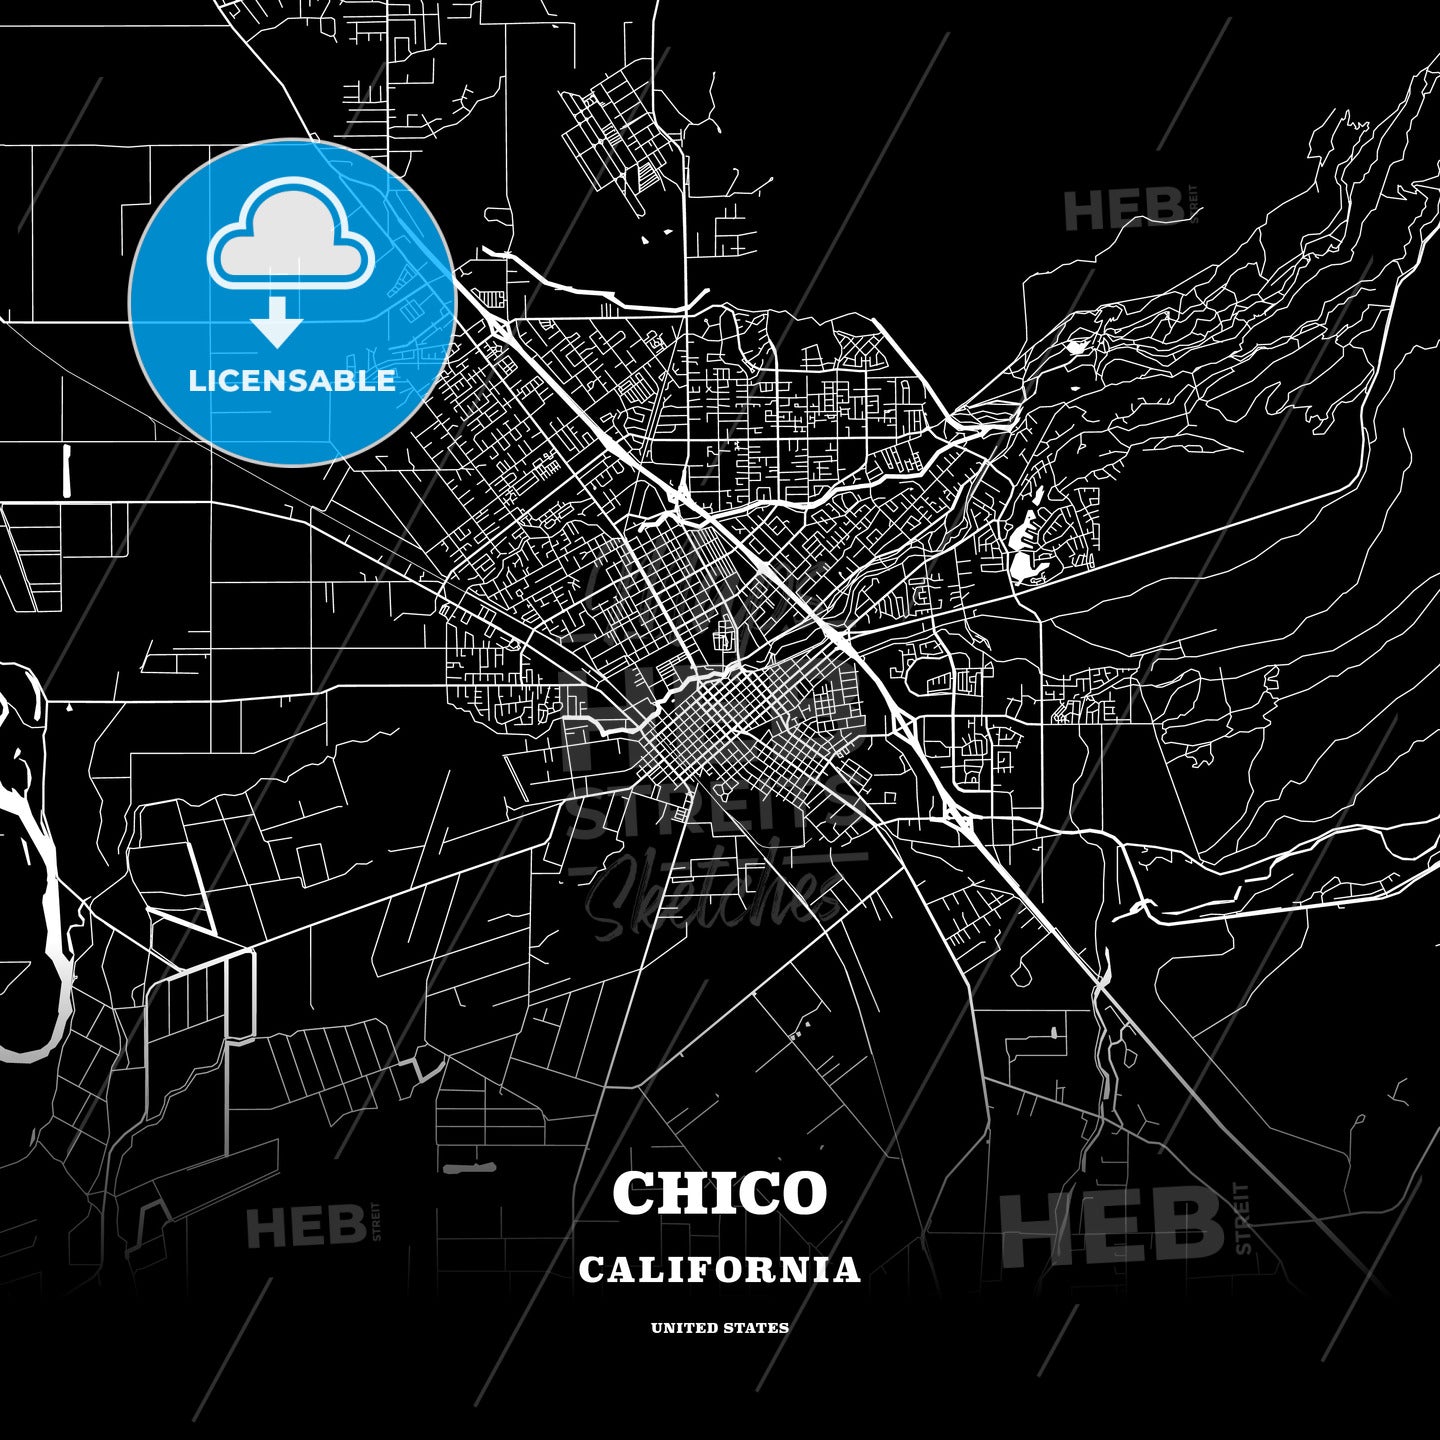 Chico, California, USA map